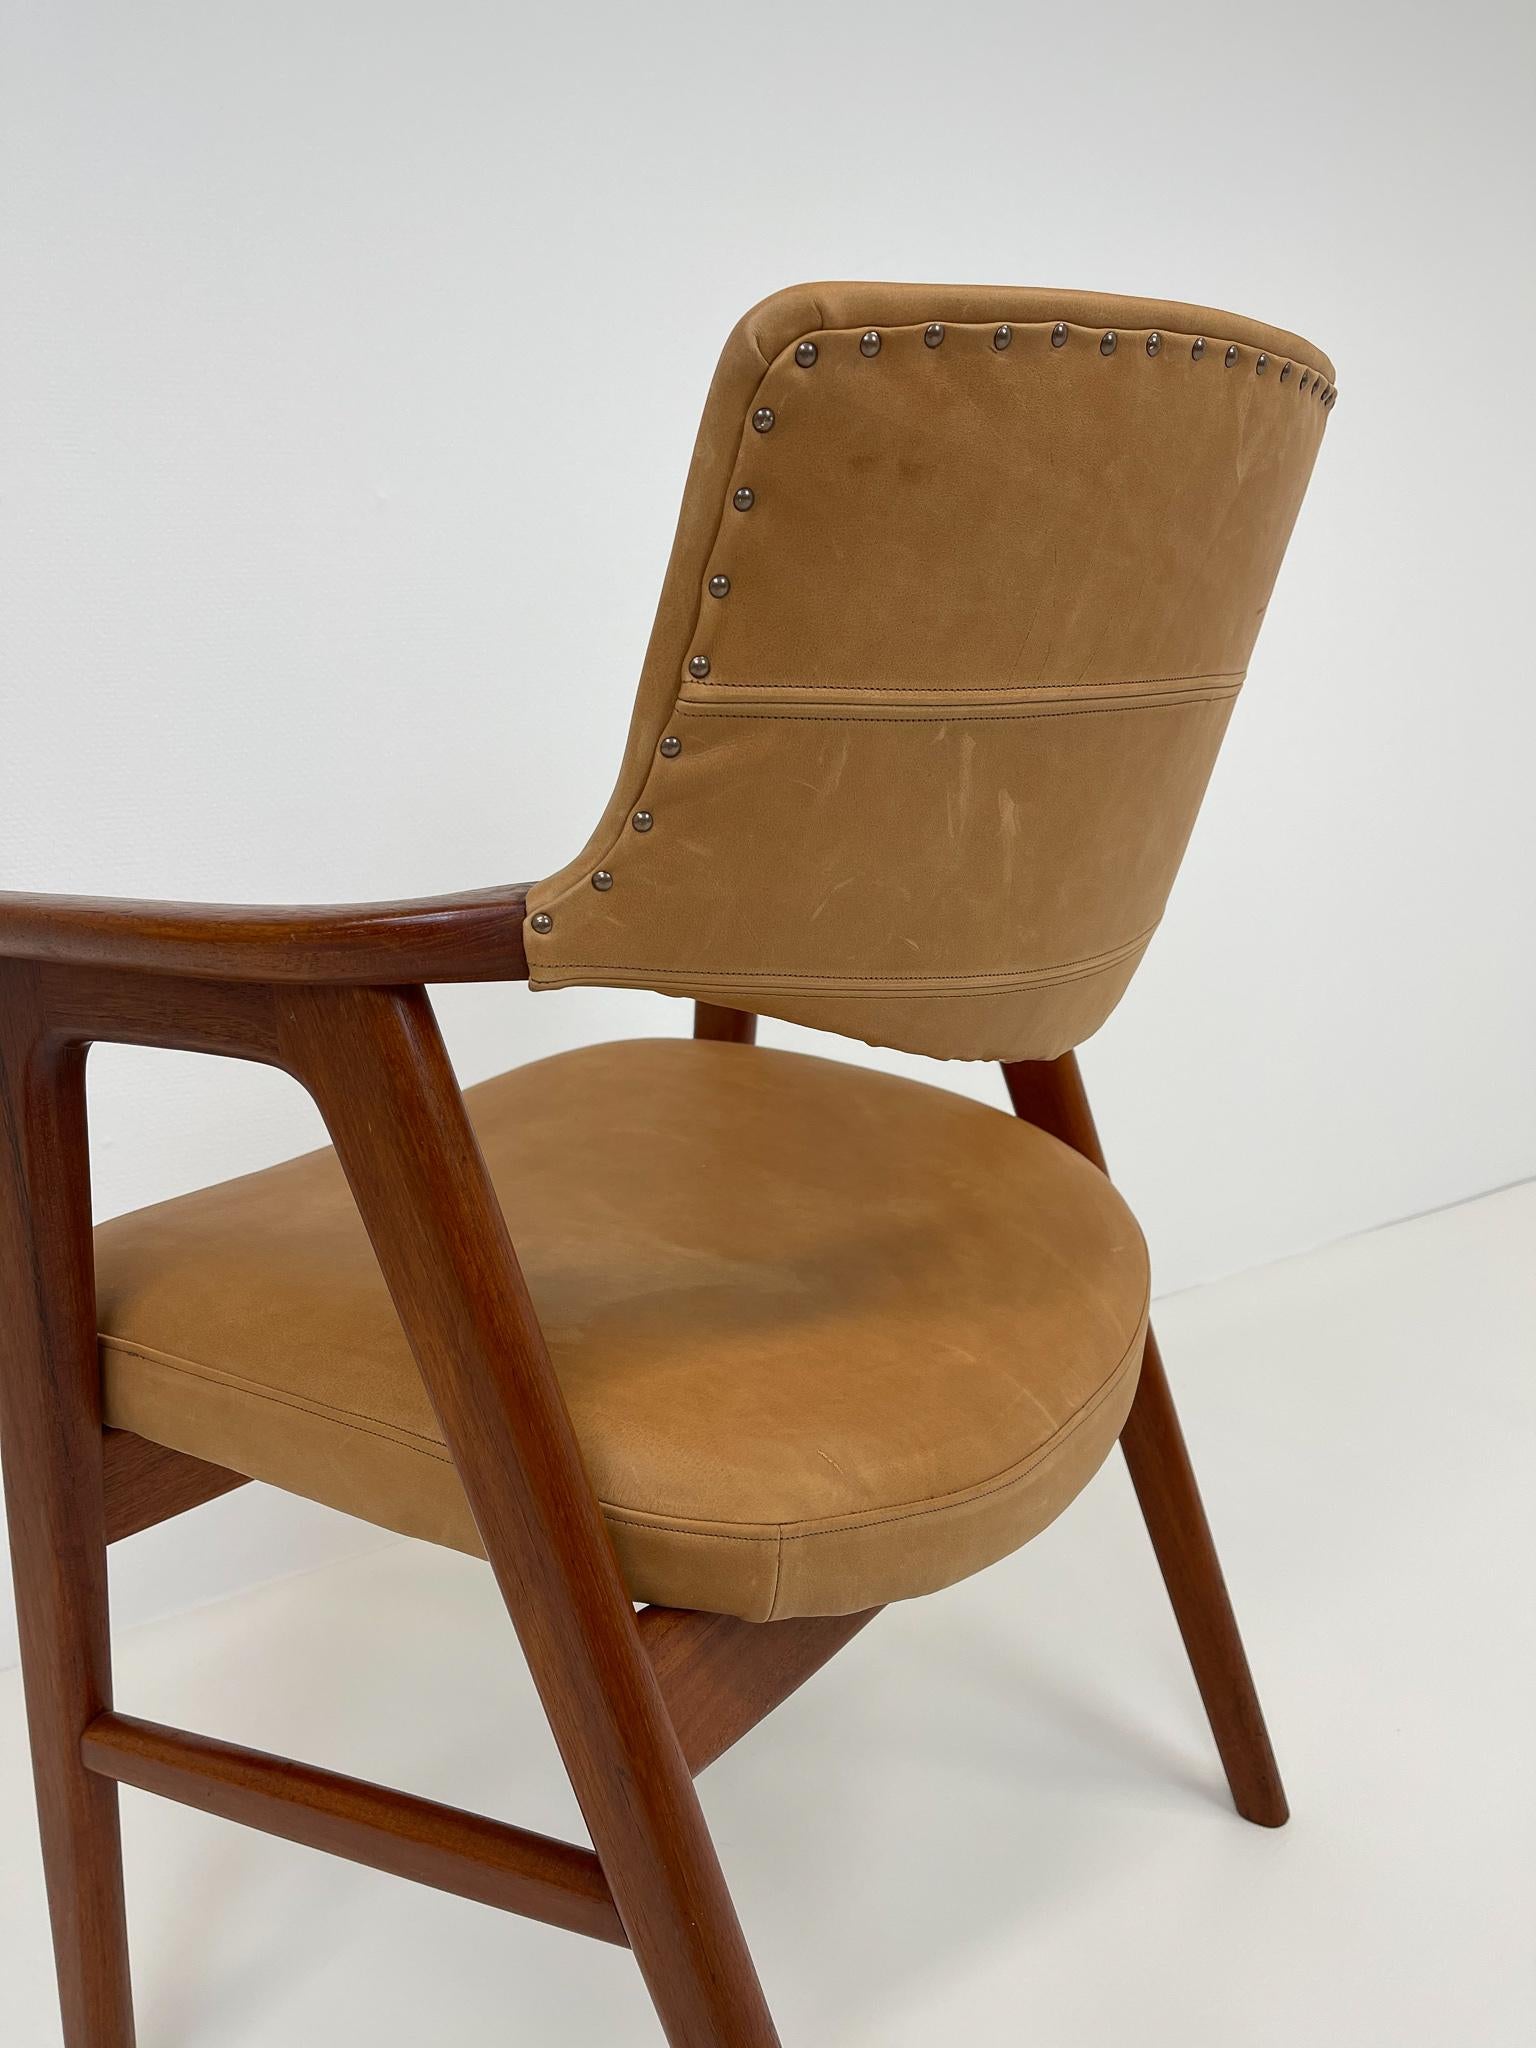 Midcentury Erik Kirkegaard Danish Teak and Leather Desk Chair, 1960s For Sale 3